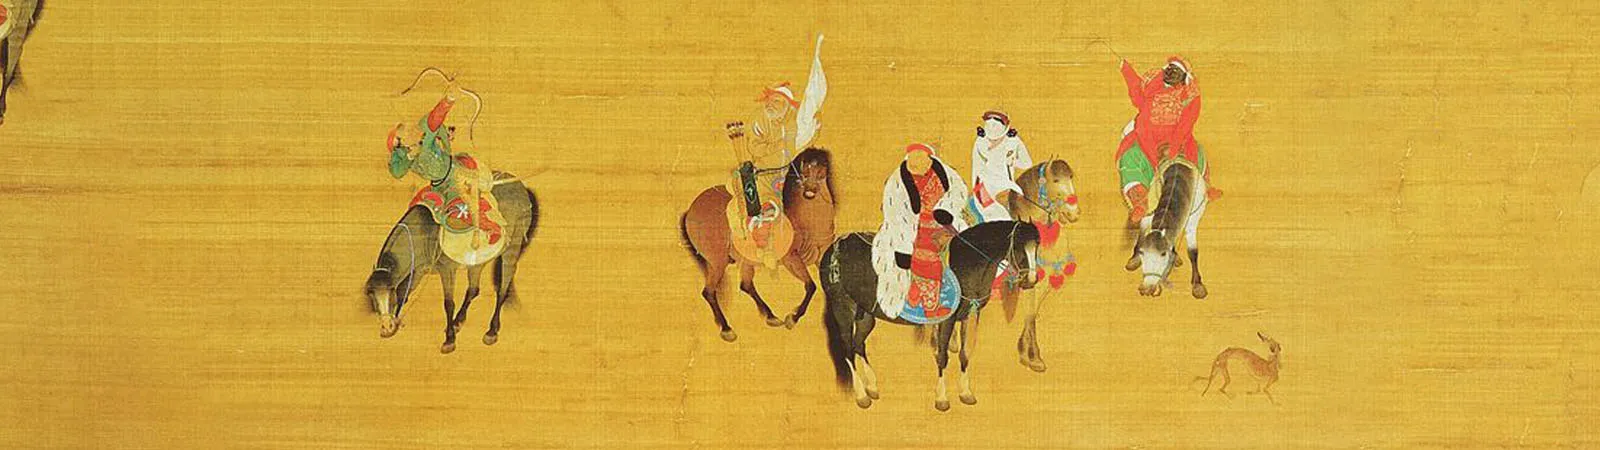 # 9 The Yuan Dynasty